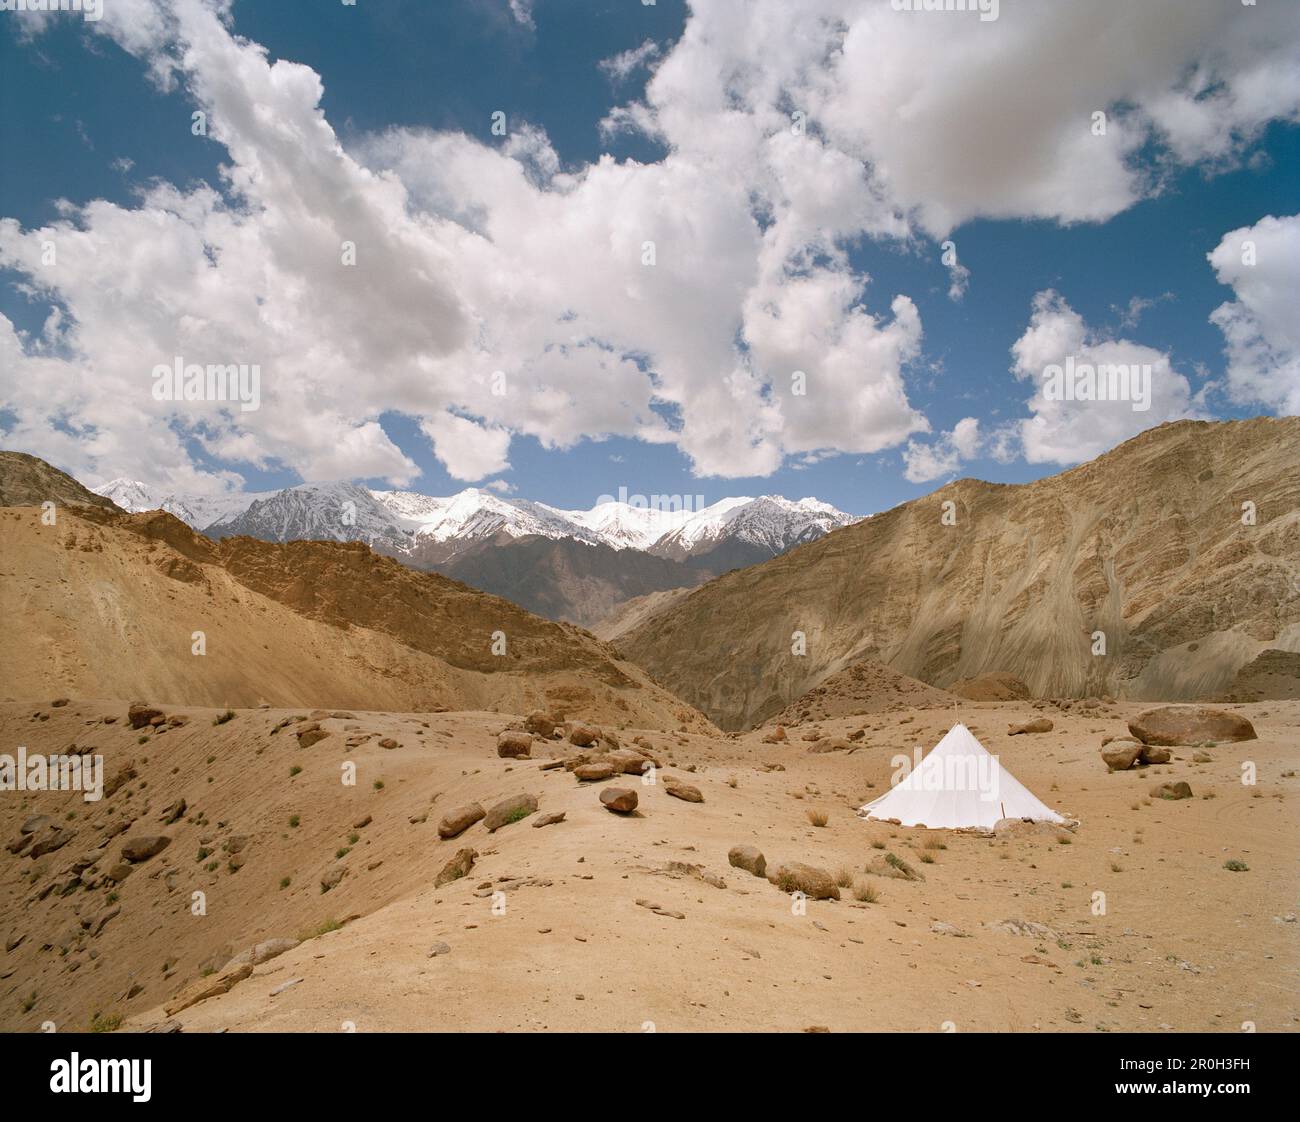 Tent of roadmen ahead Ladakh Range, near Sham Trek west of Leh, Ladakh, Jammu and Kashmir, India Stock Photo